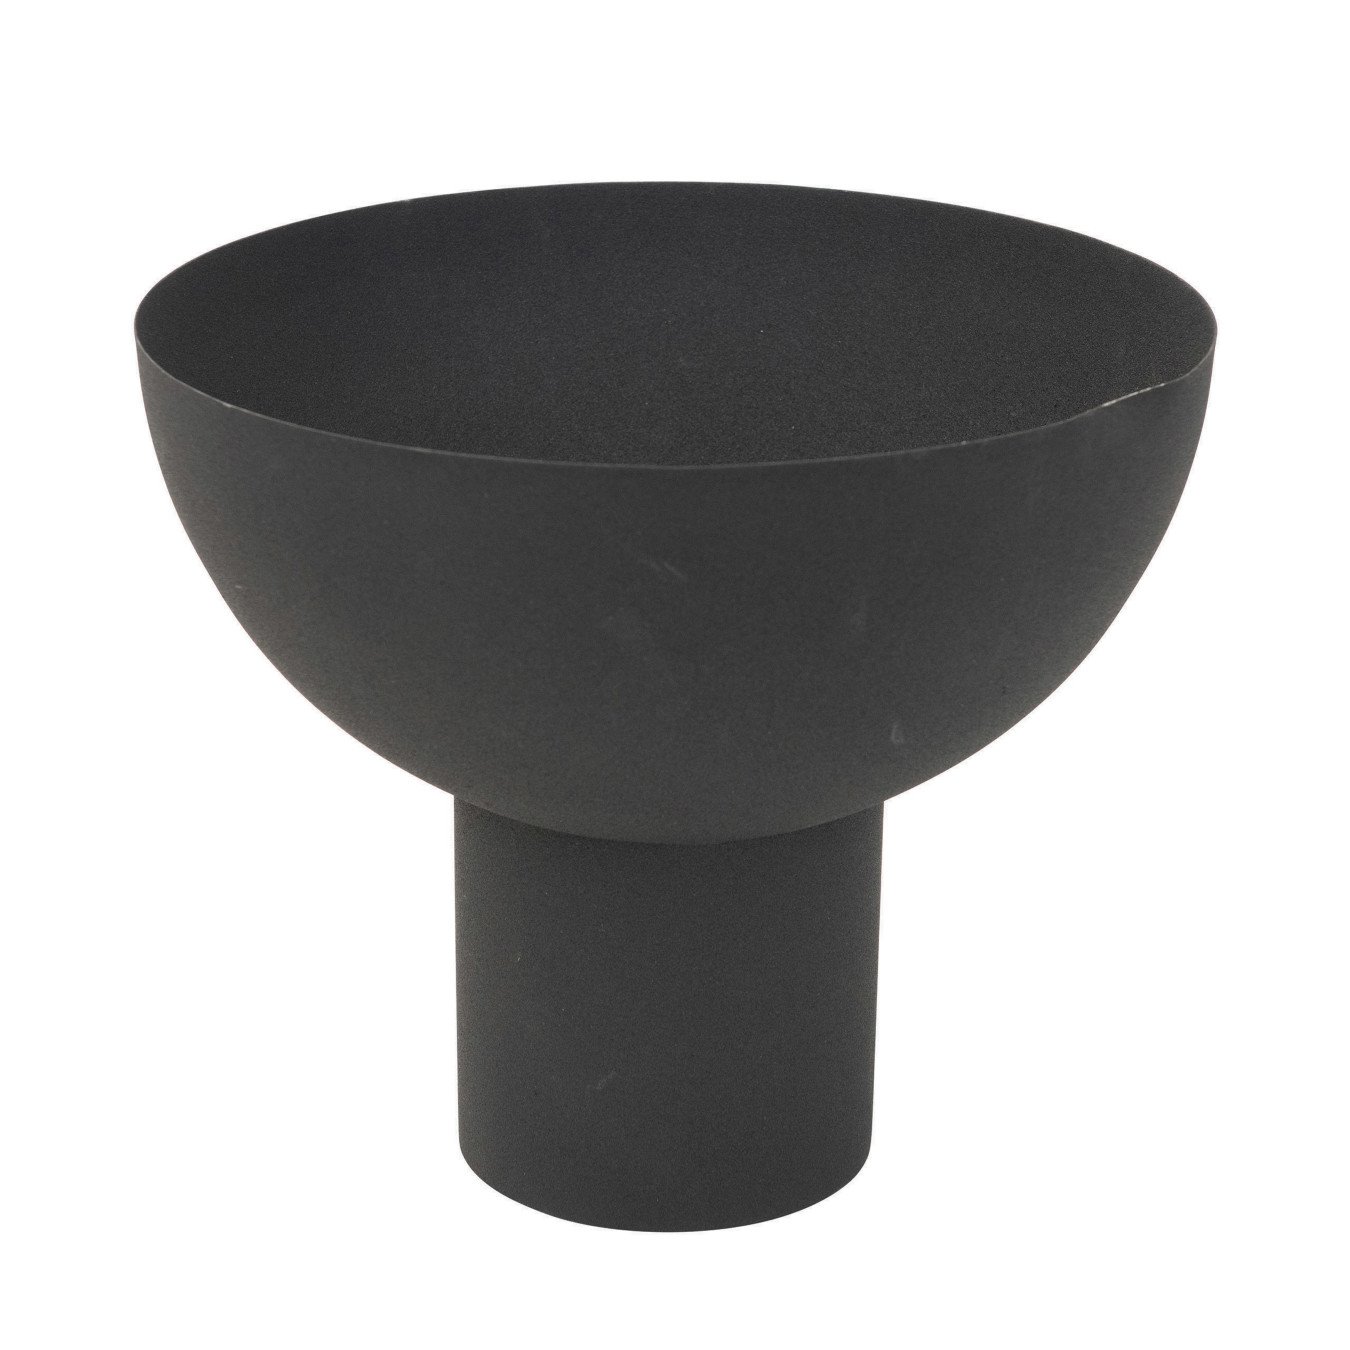 Decorative Metal Footed Bowl, Black